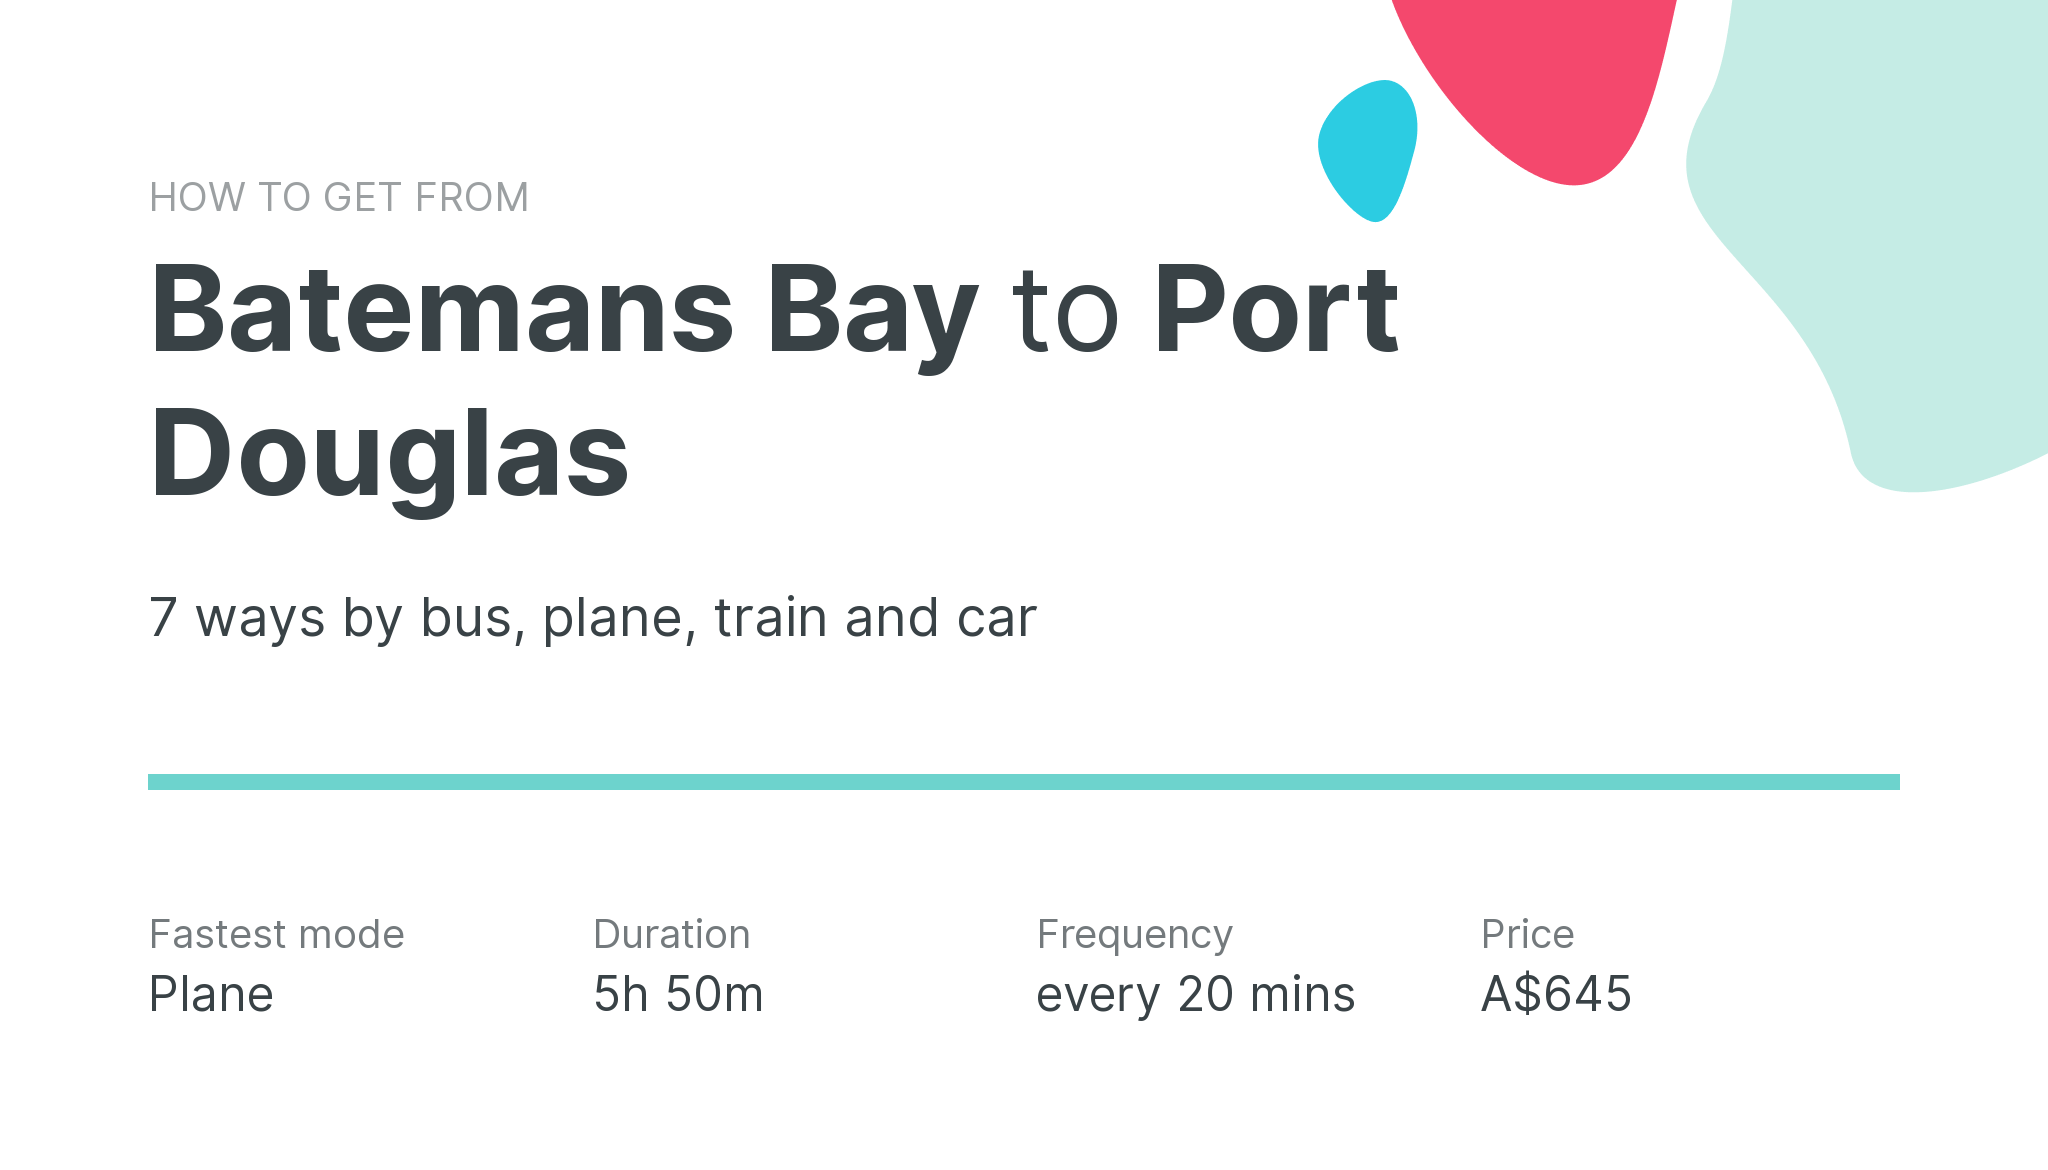 How do I get from Batemans Bay to Port Douglas